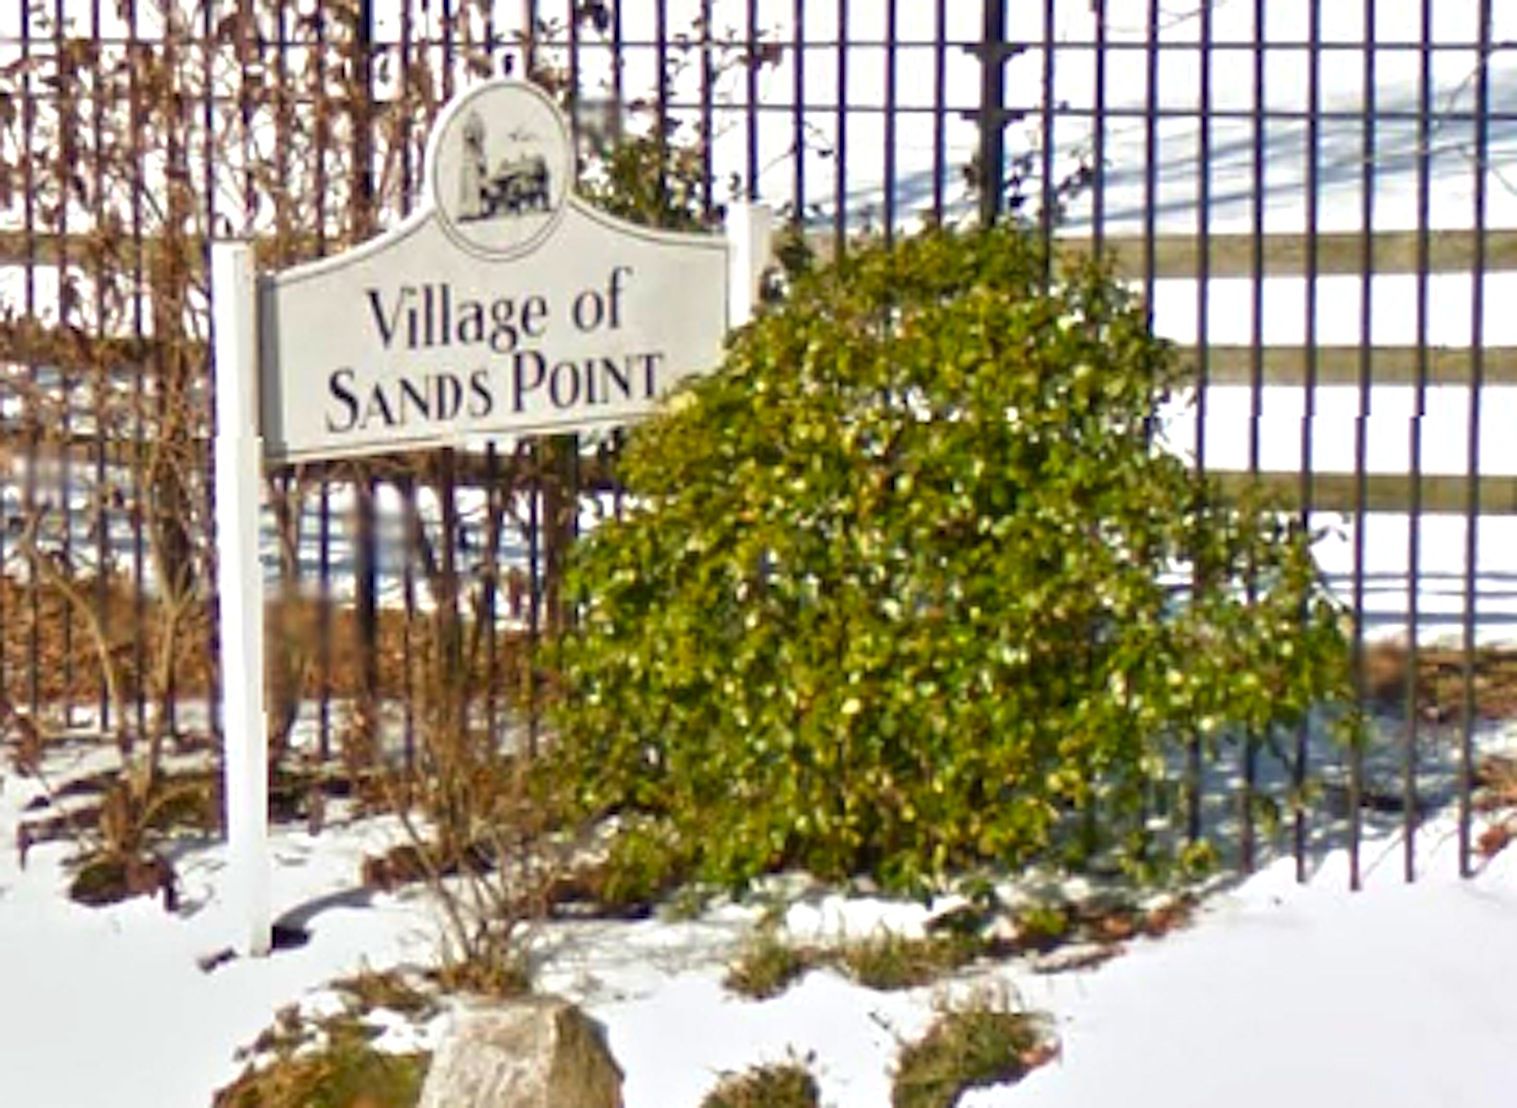 Road work to begin next spring in Sands Point